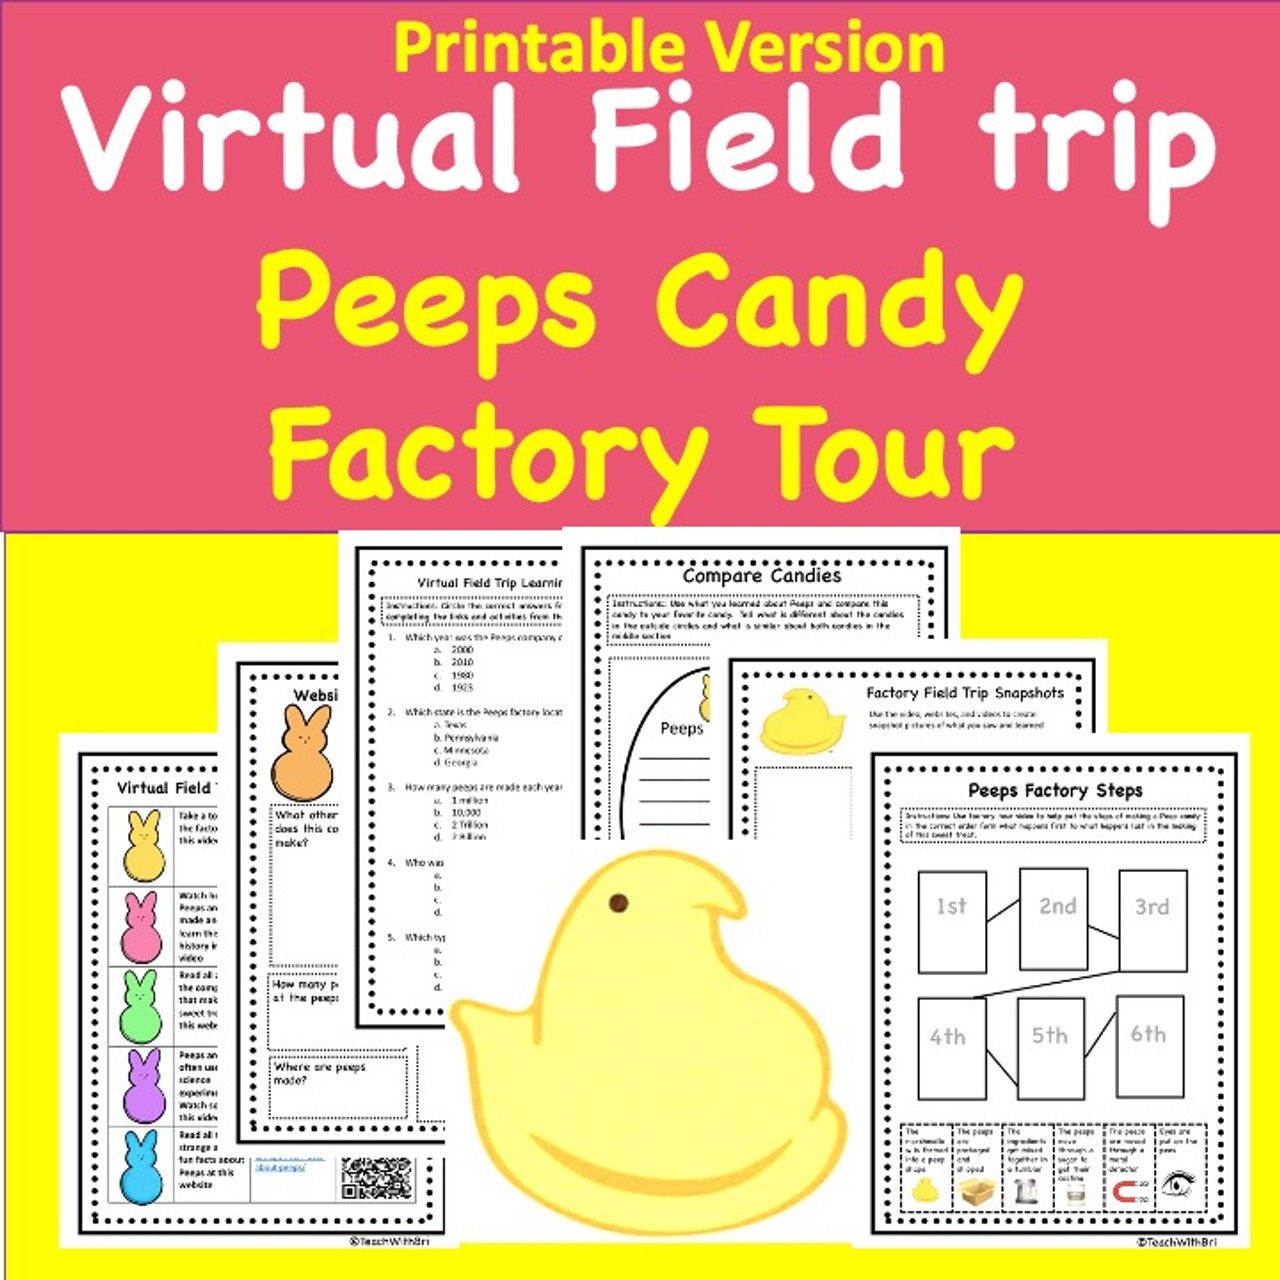 Peeps Factory Tour - Virtual Field Trip - Printable Version